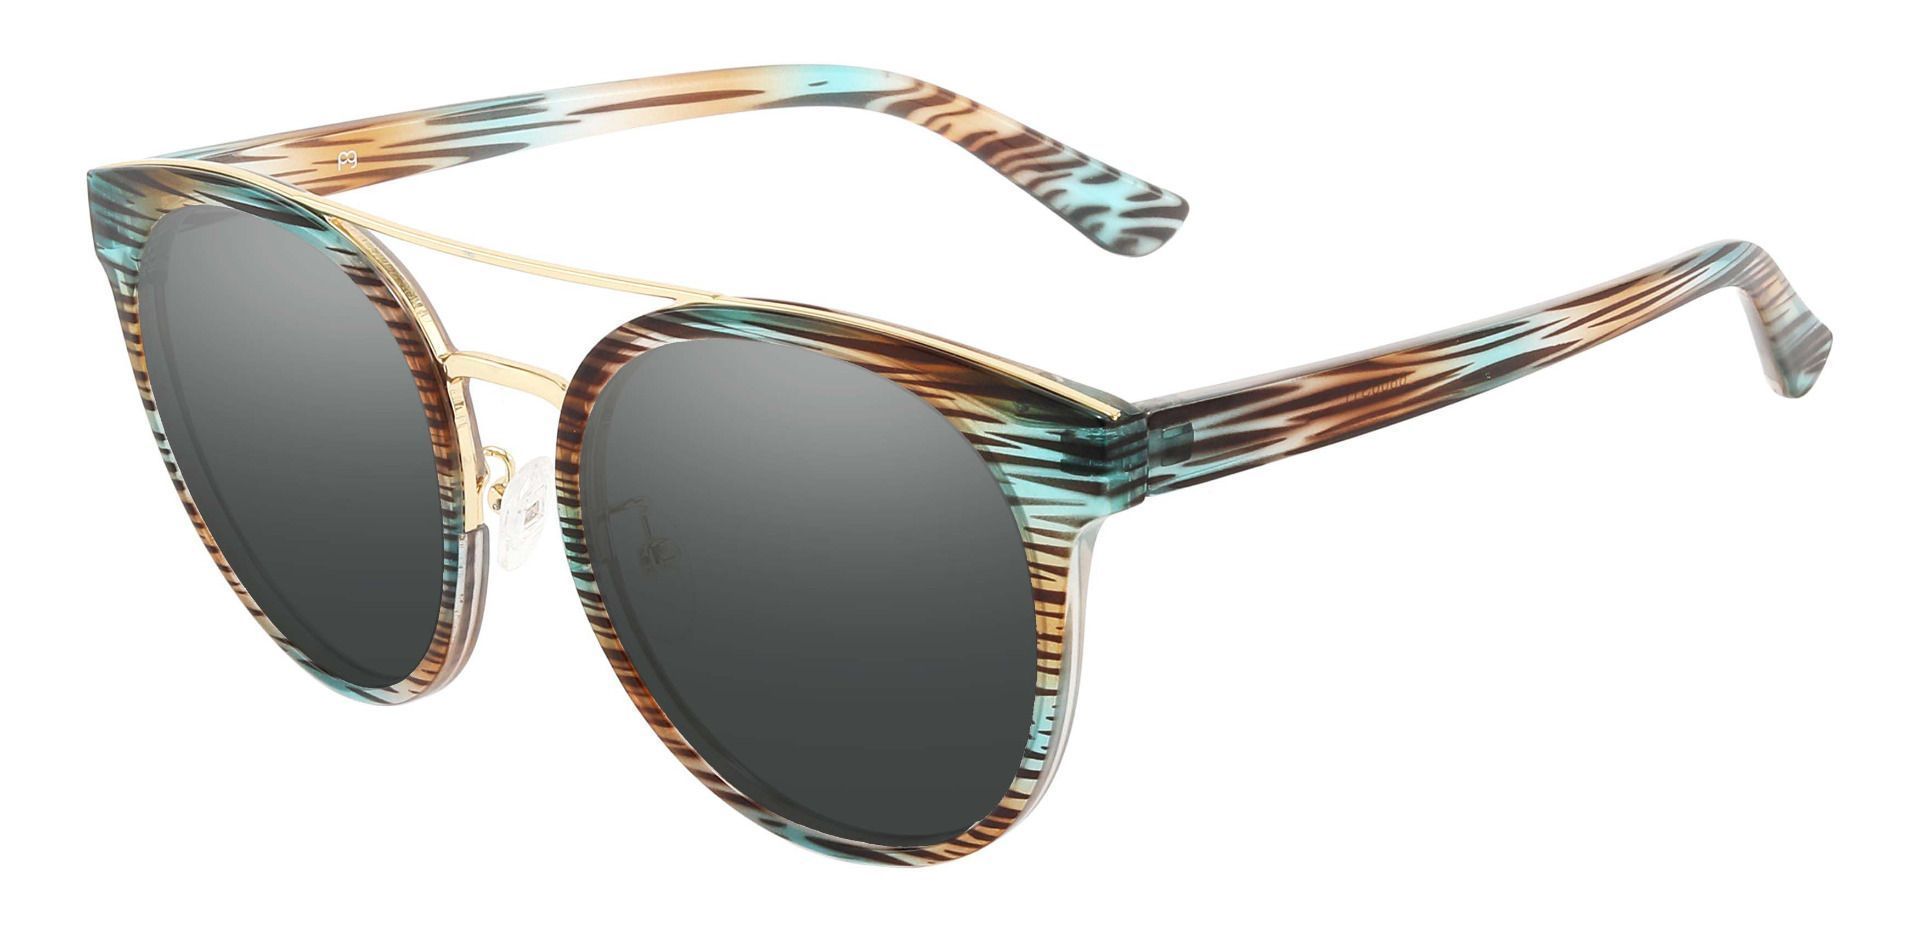 Oasis Aviator Prescription Sunglasses - Striped Frame With Gray Lenses